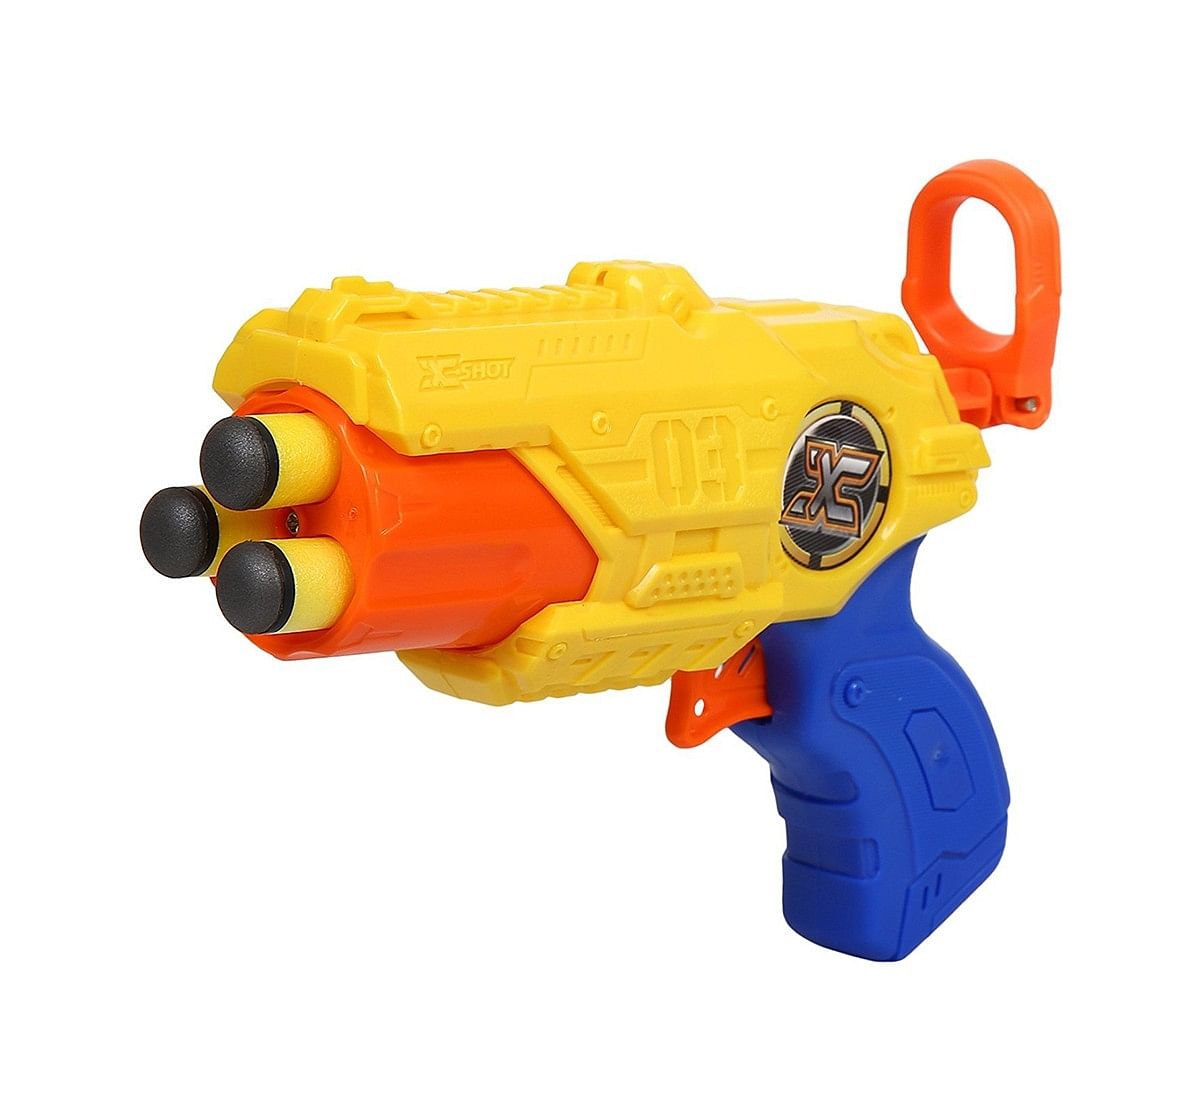 X-Shot Barrel Breaker Blaster Gun Tk-3 With 6 Darts, White Blasters for Kids age 8Y+ (Yellow)